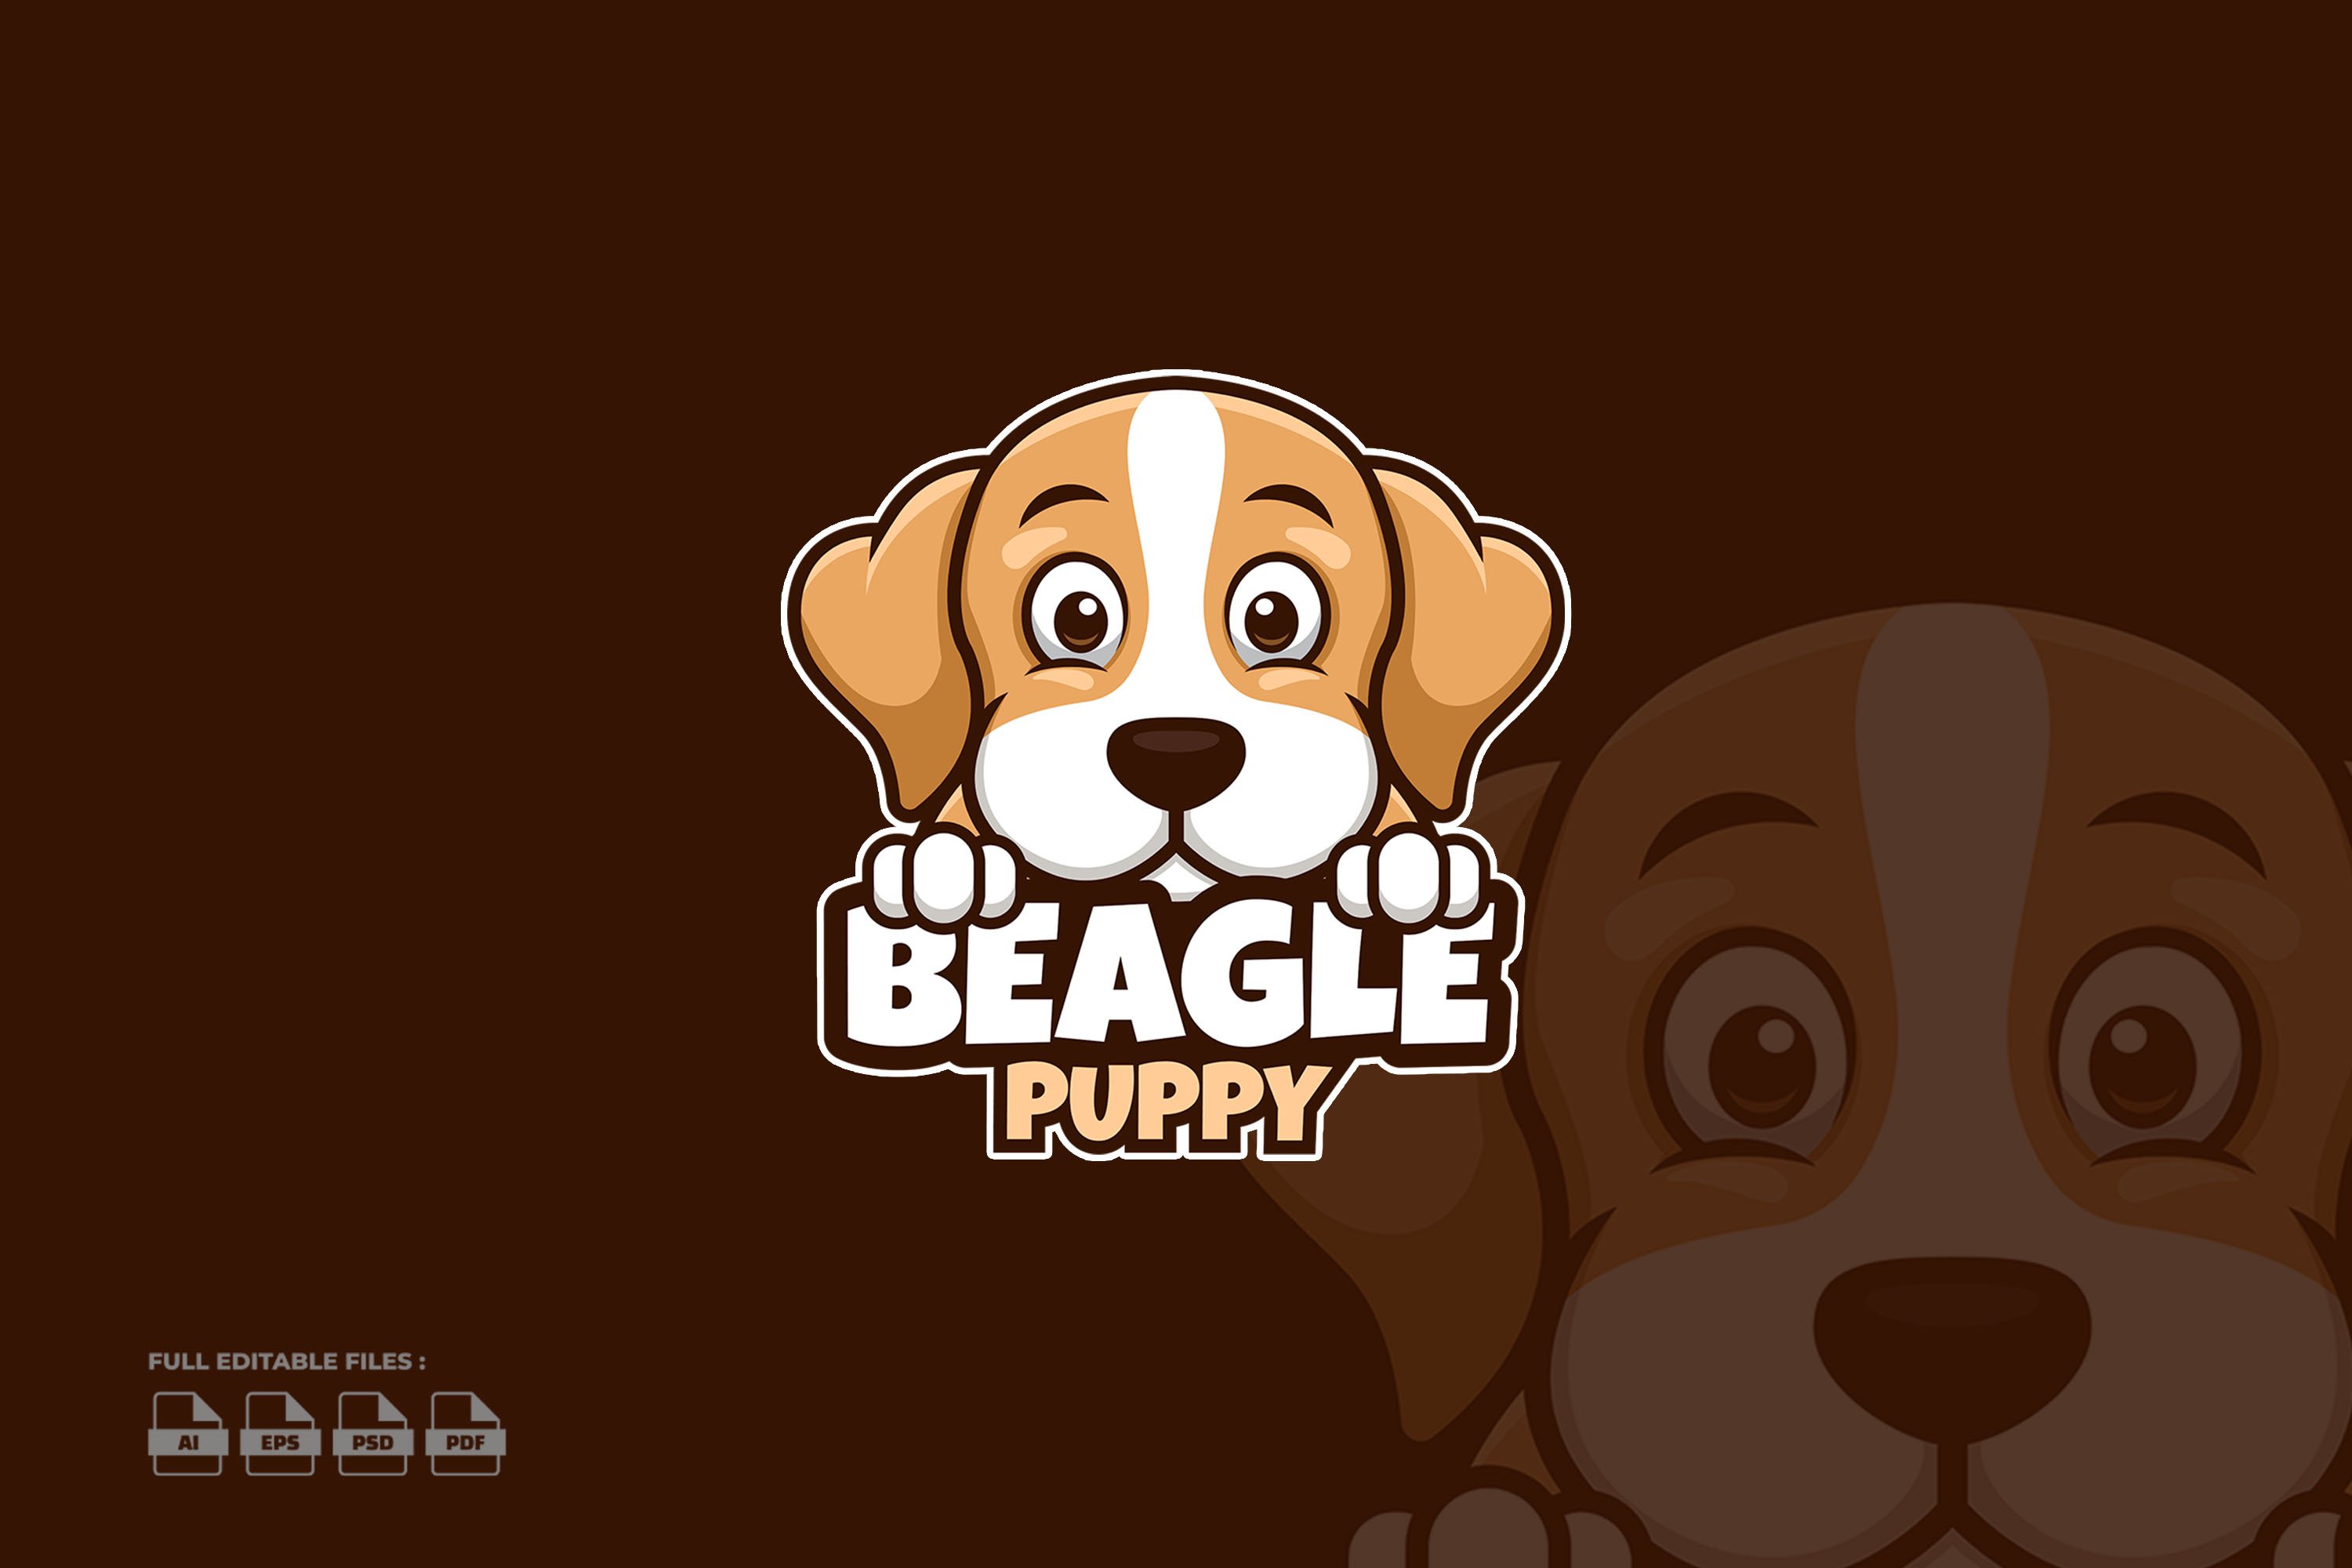 Beagle Puppy Pet Cartoon Logo cover image.